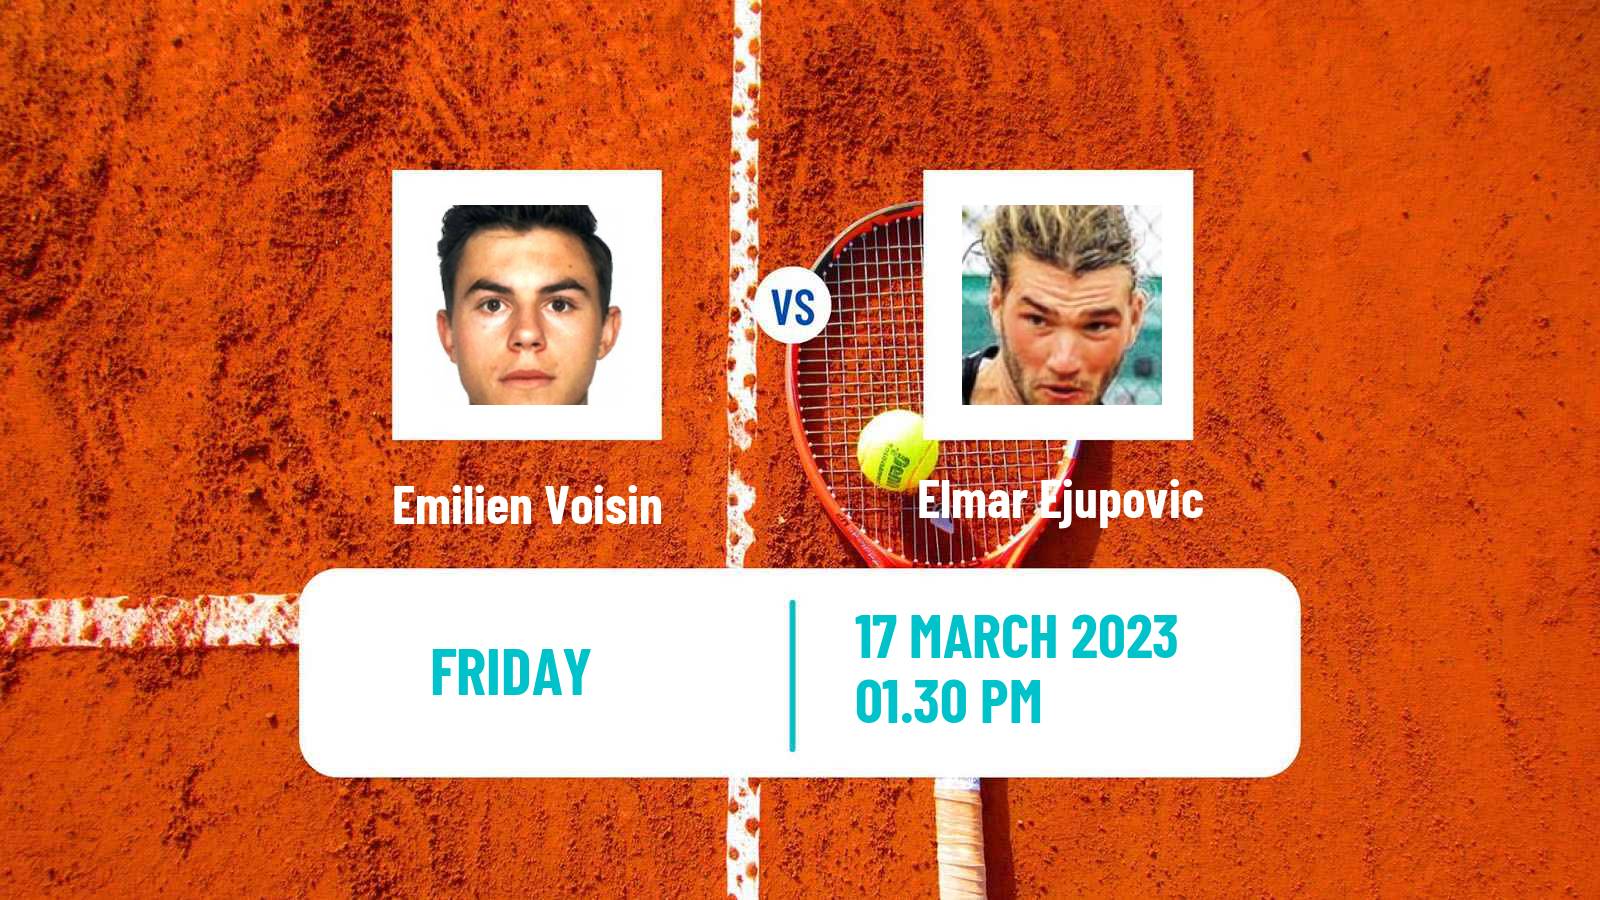 Tennis ITF Tournaments Emilien Voisin - Elmar Ejupovic